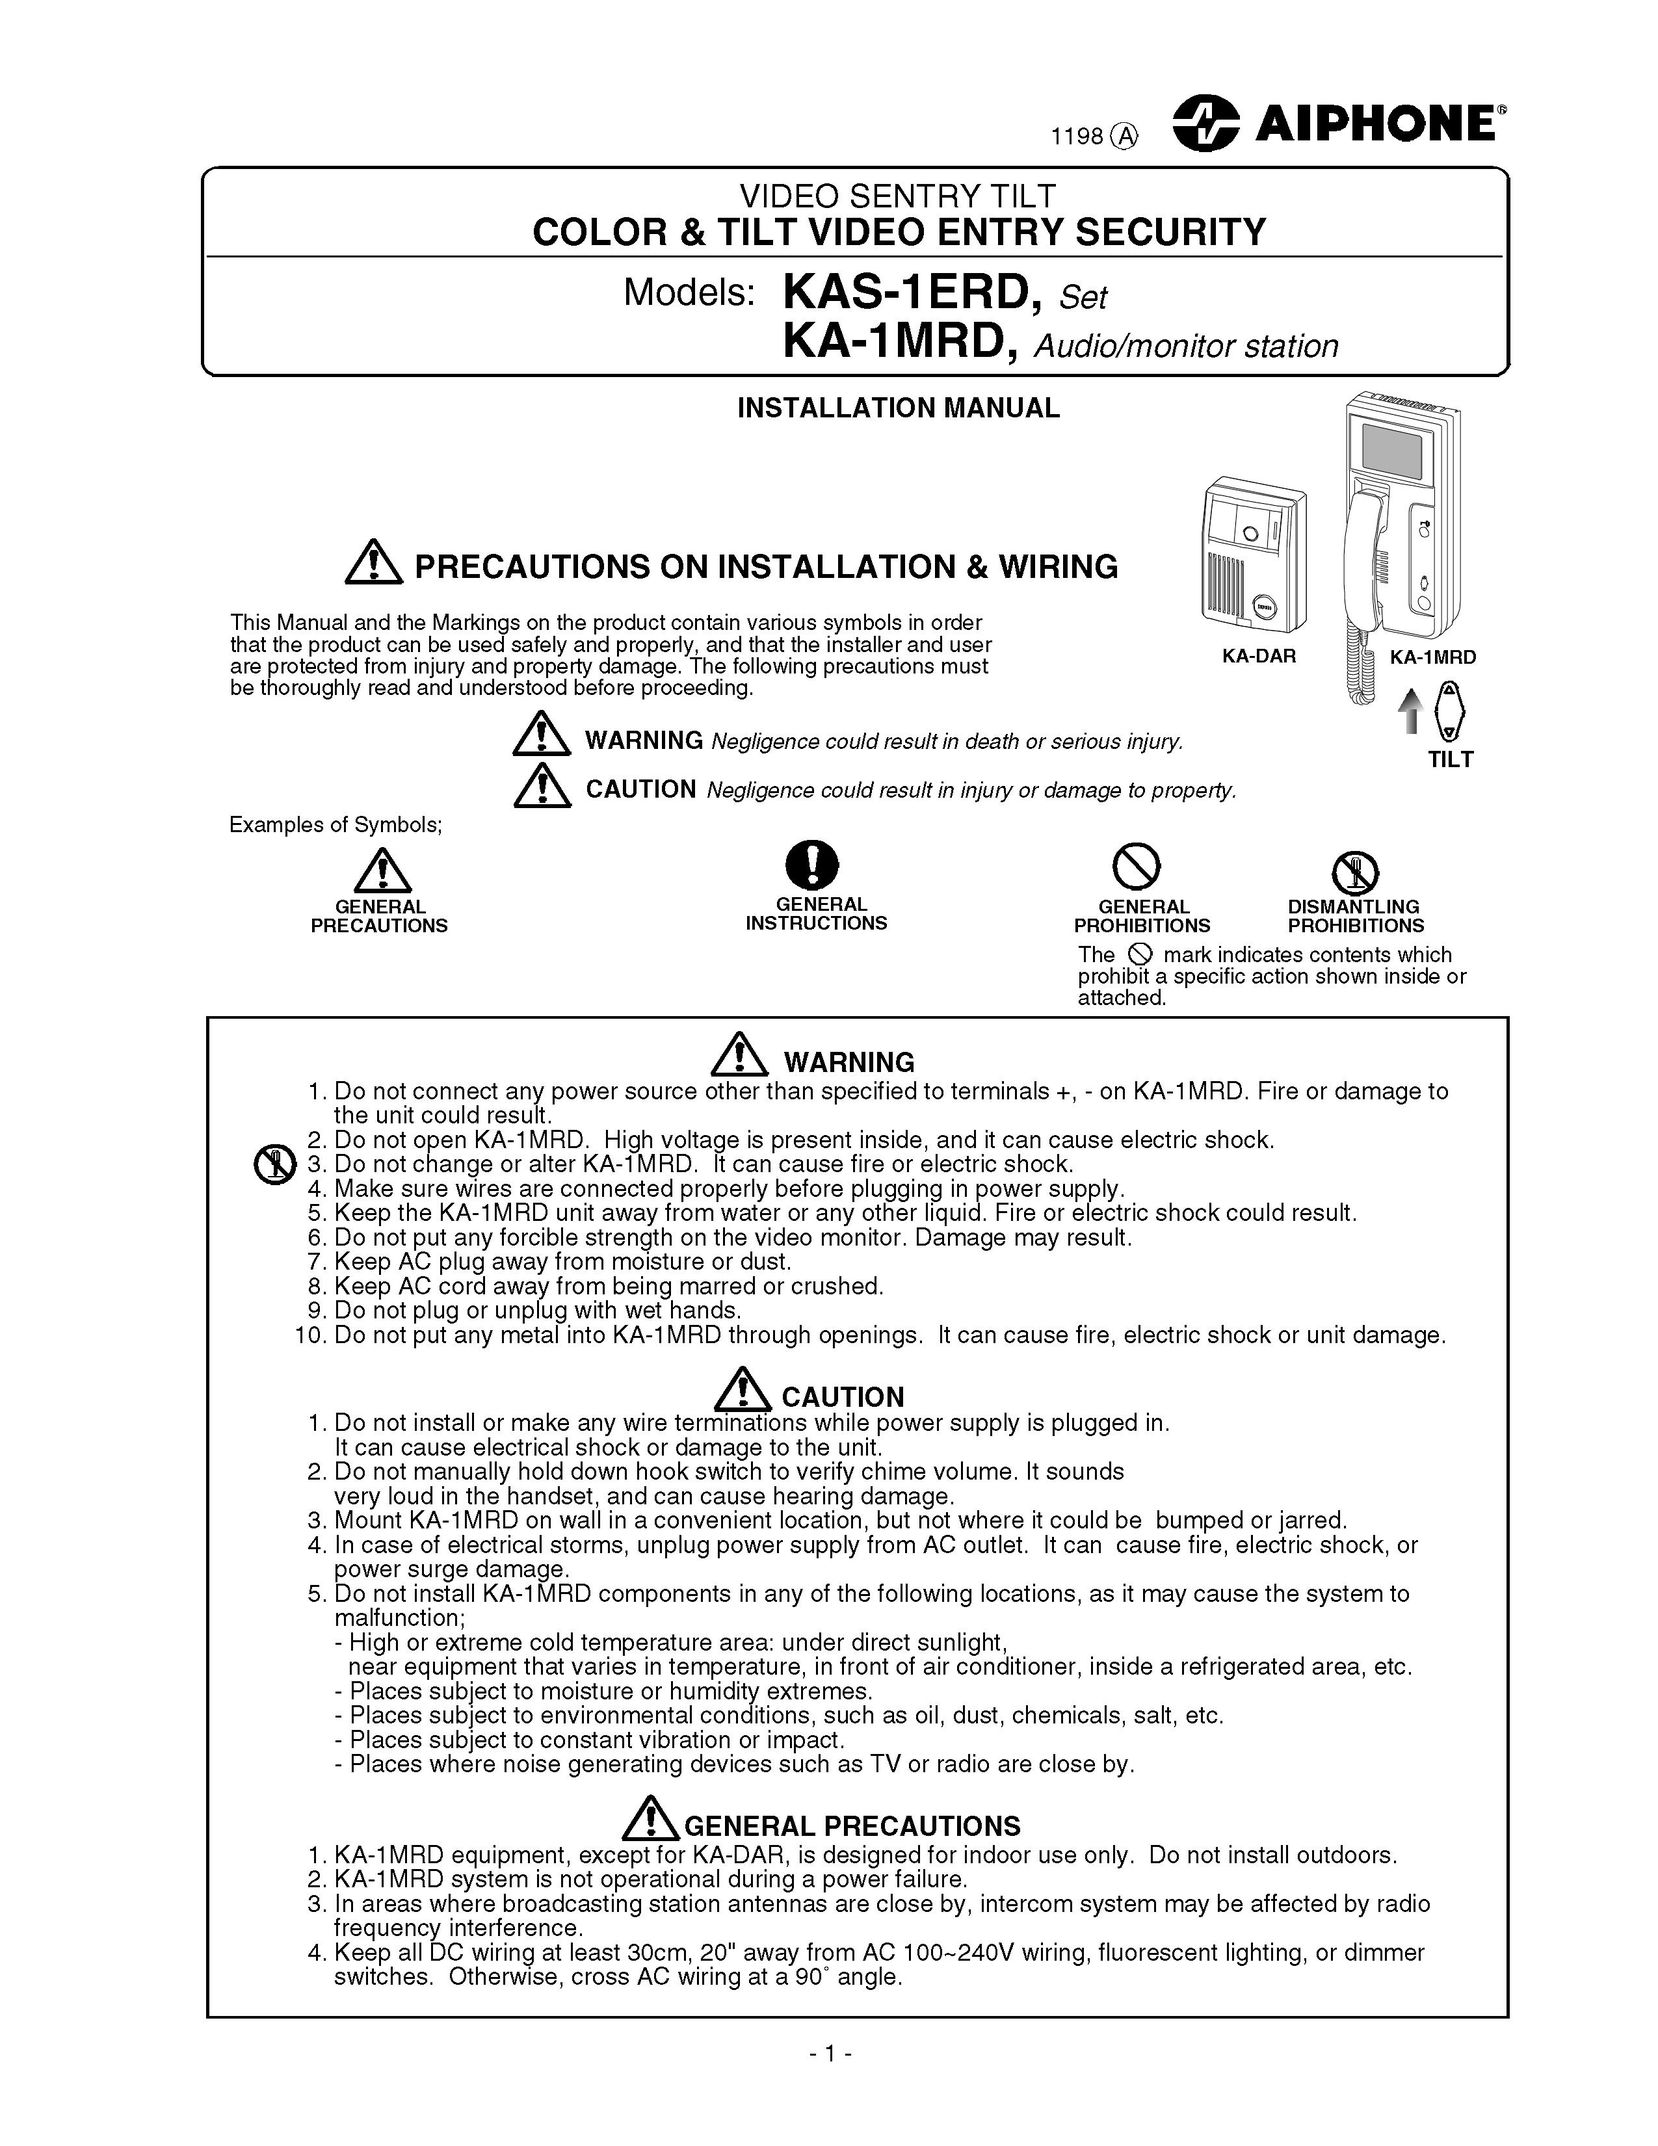 Aiphone KA-1MRD Home Security System User Manual